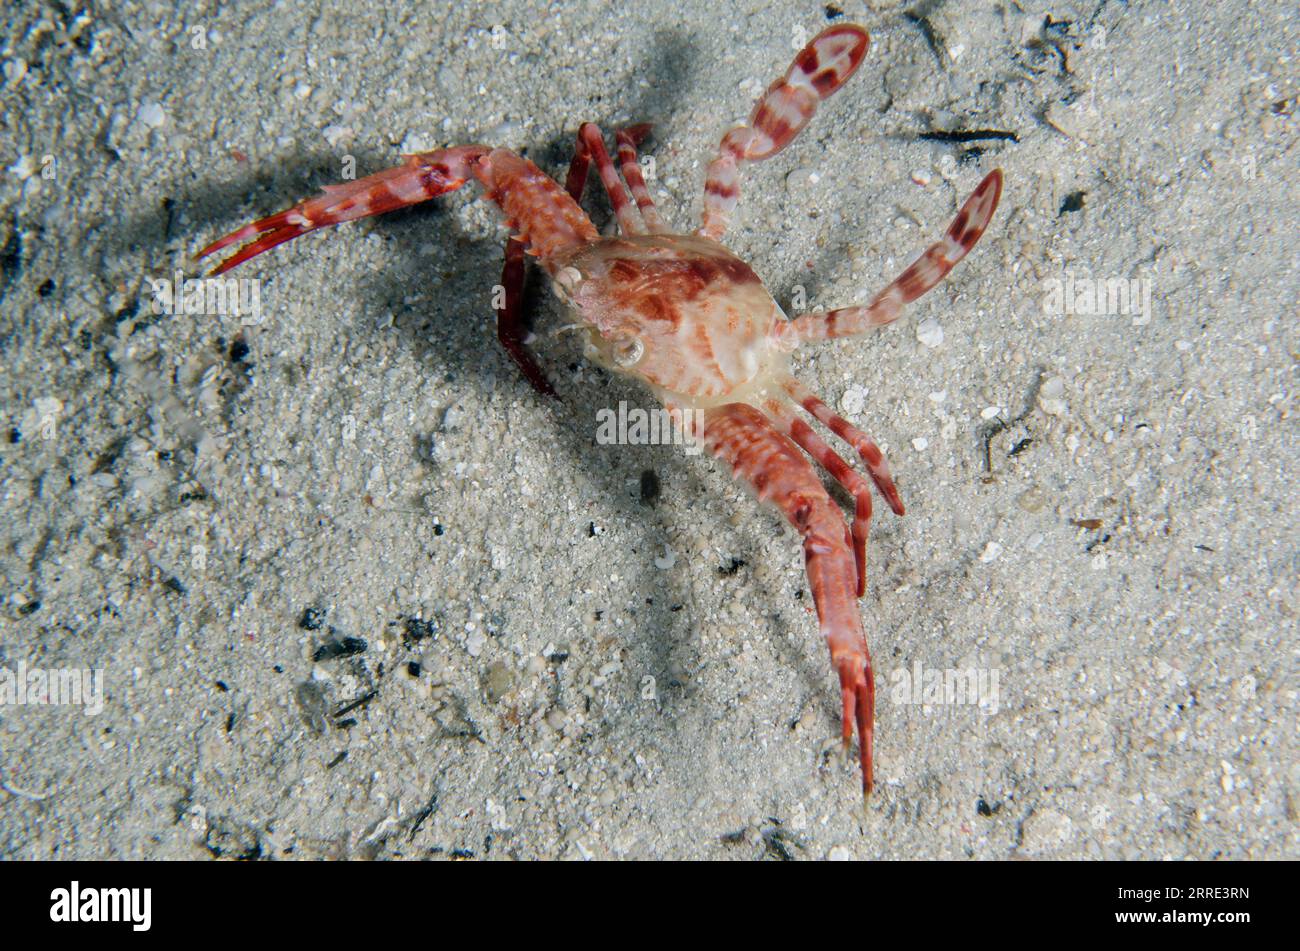 Swimming Crab, Thalamita sp, on sand, night dive, Sakokreng Jetty dive site, Dampier Strait, Raja Ampat, West Papua, Indonesia Stock Photo